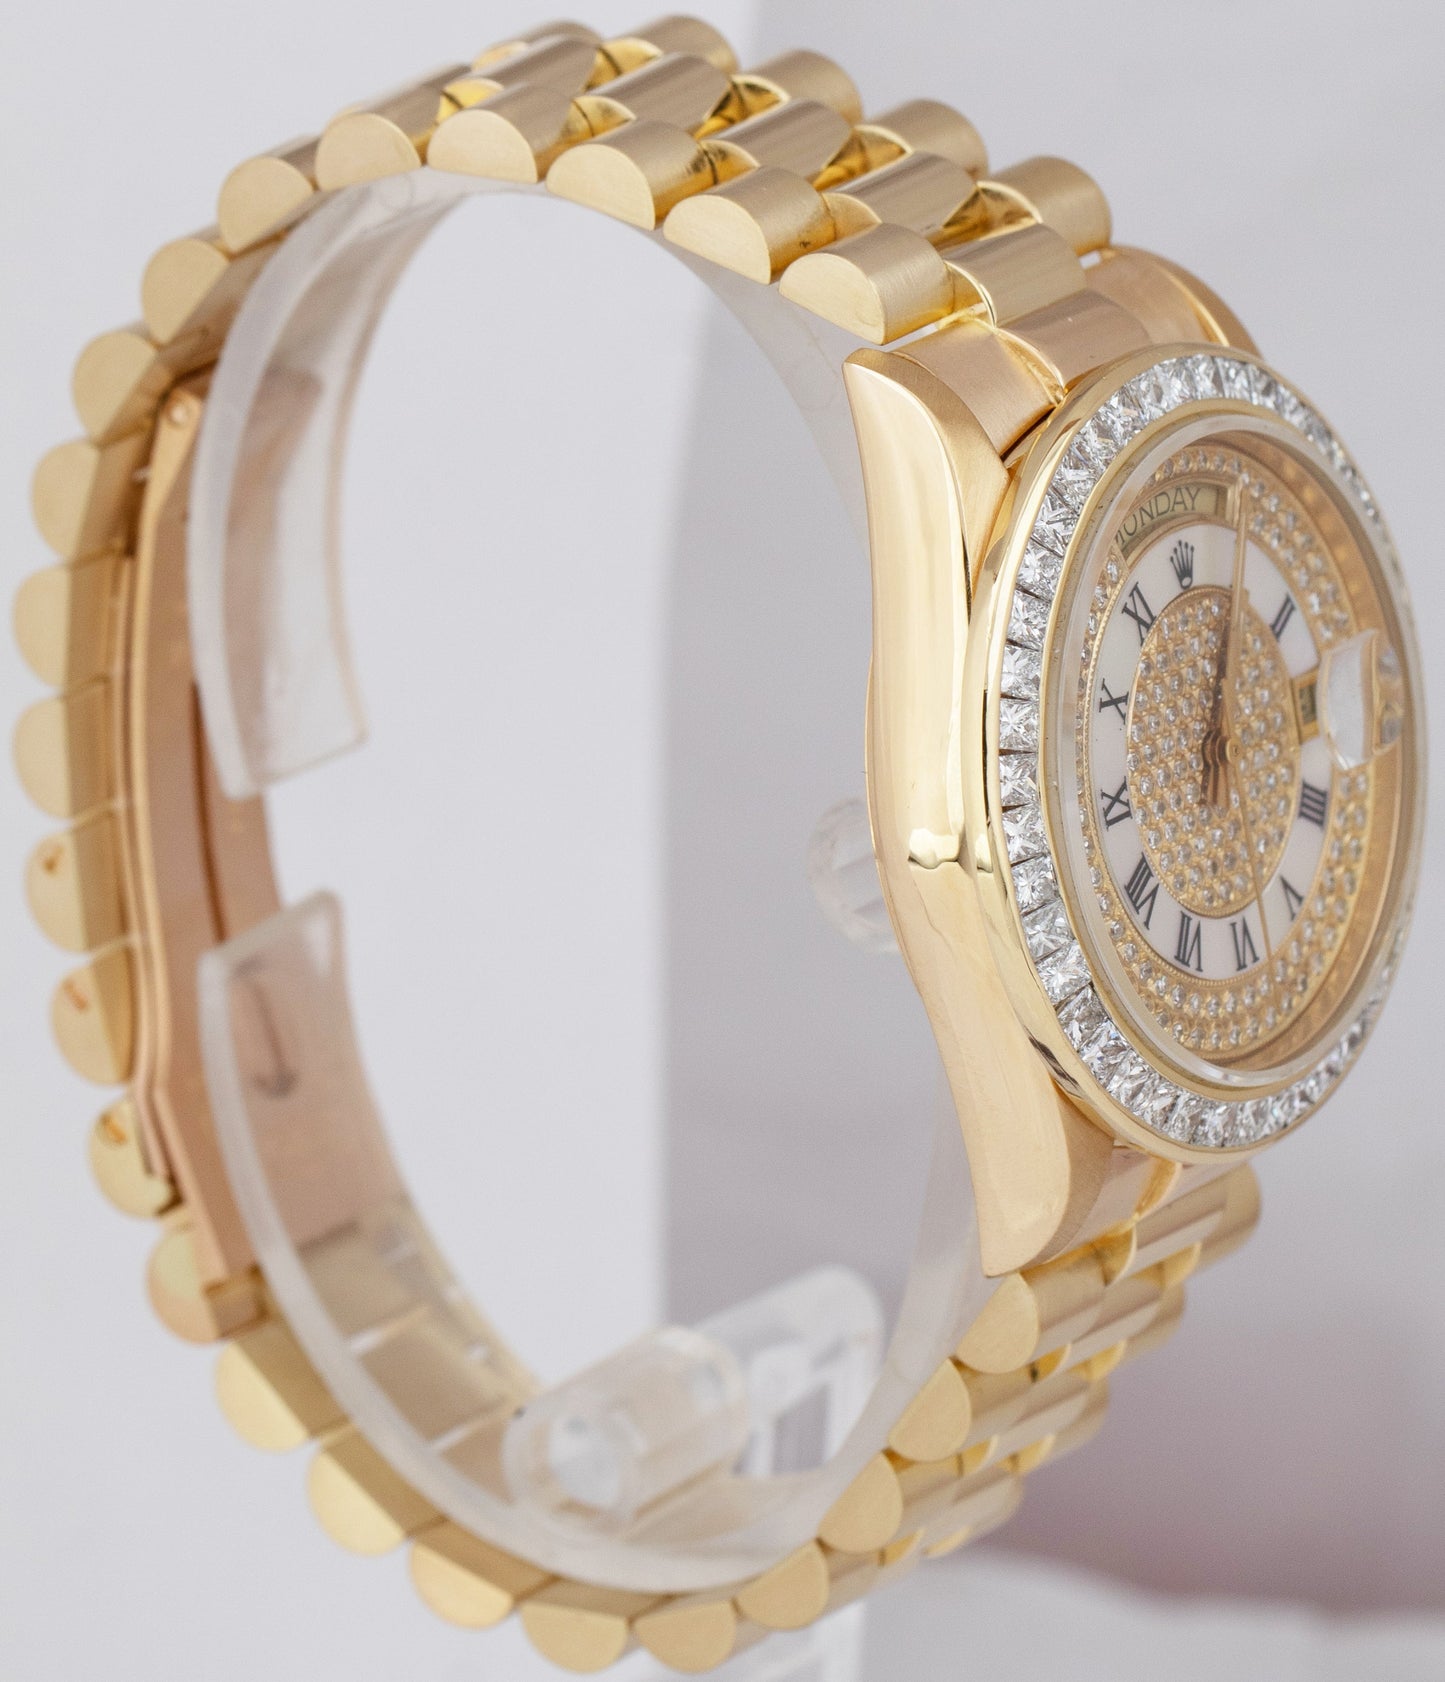 Rolex Day-Date President MOP DIAMOND 36mm 18K Yellow Gold Automatic Watch 18038